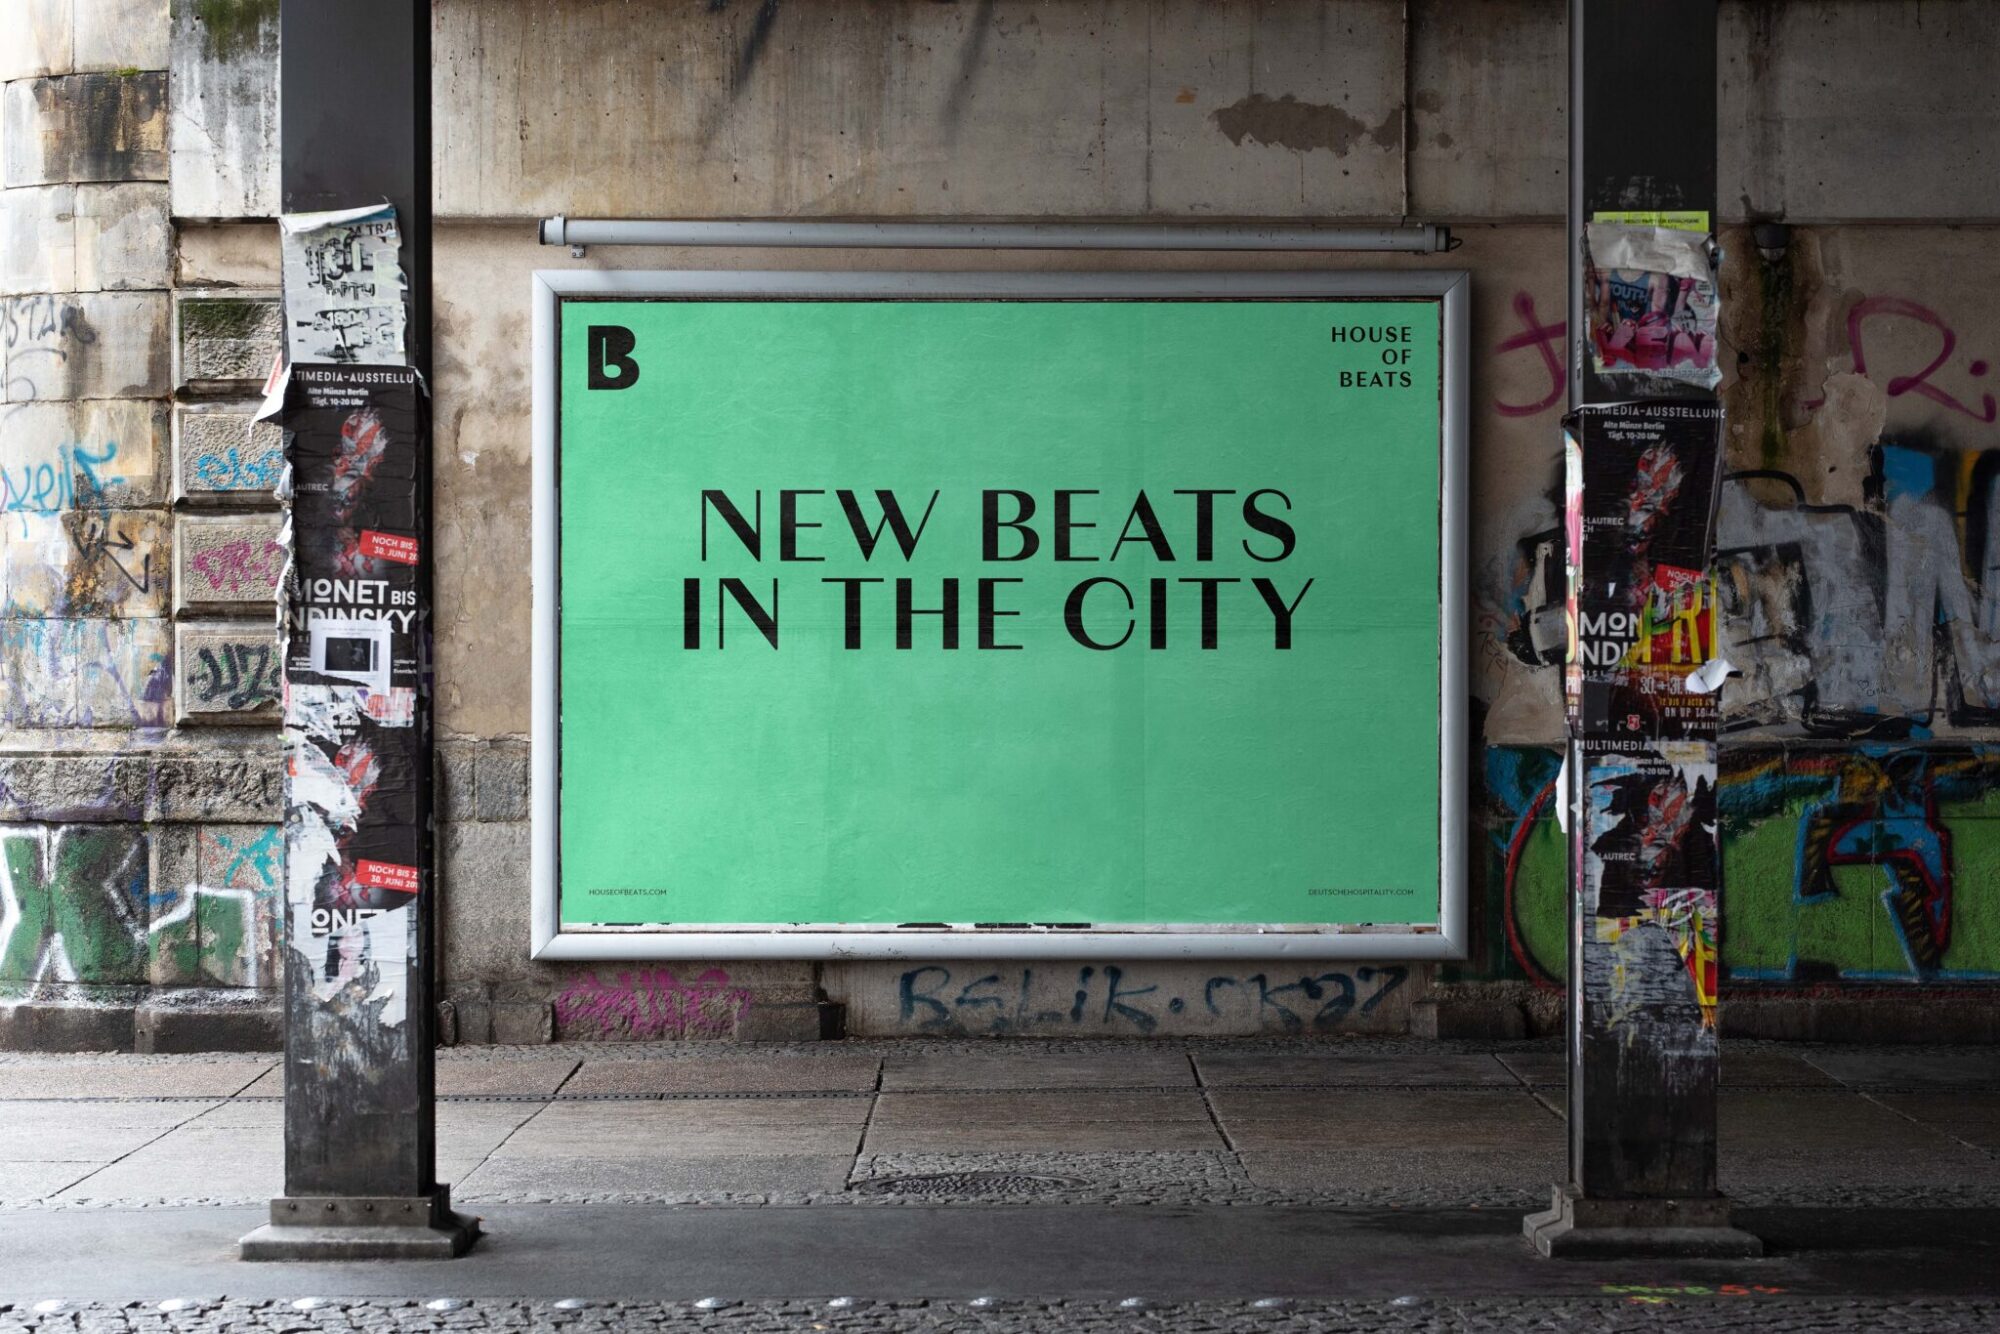 Fashion, Deutsche Hospitality unveils new upscale lifestyle 'House of Beats' brand